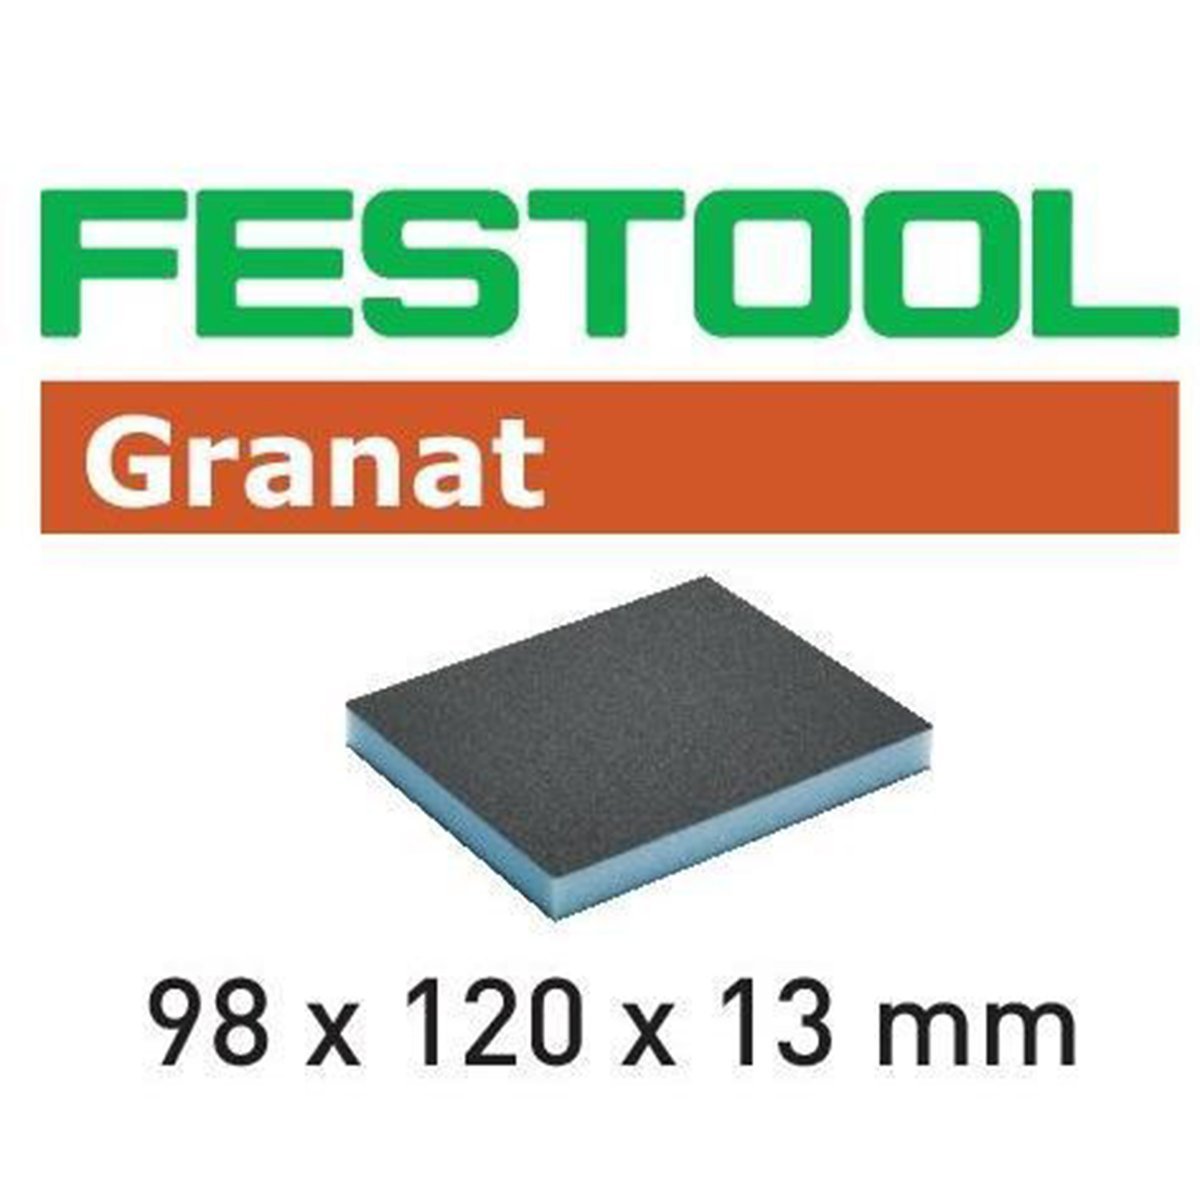 Festool 98x120x13mm double-sided Granat abrasive sponge has a foam core for hand sanding flat surfaces or contours.